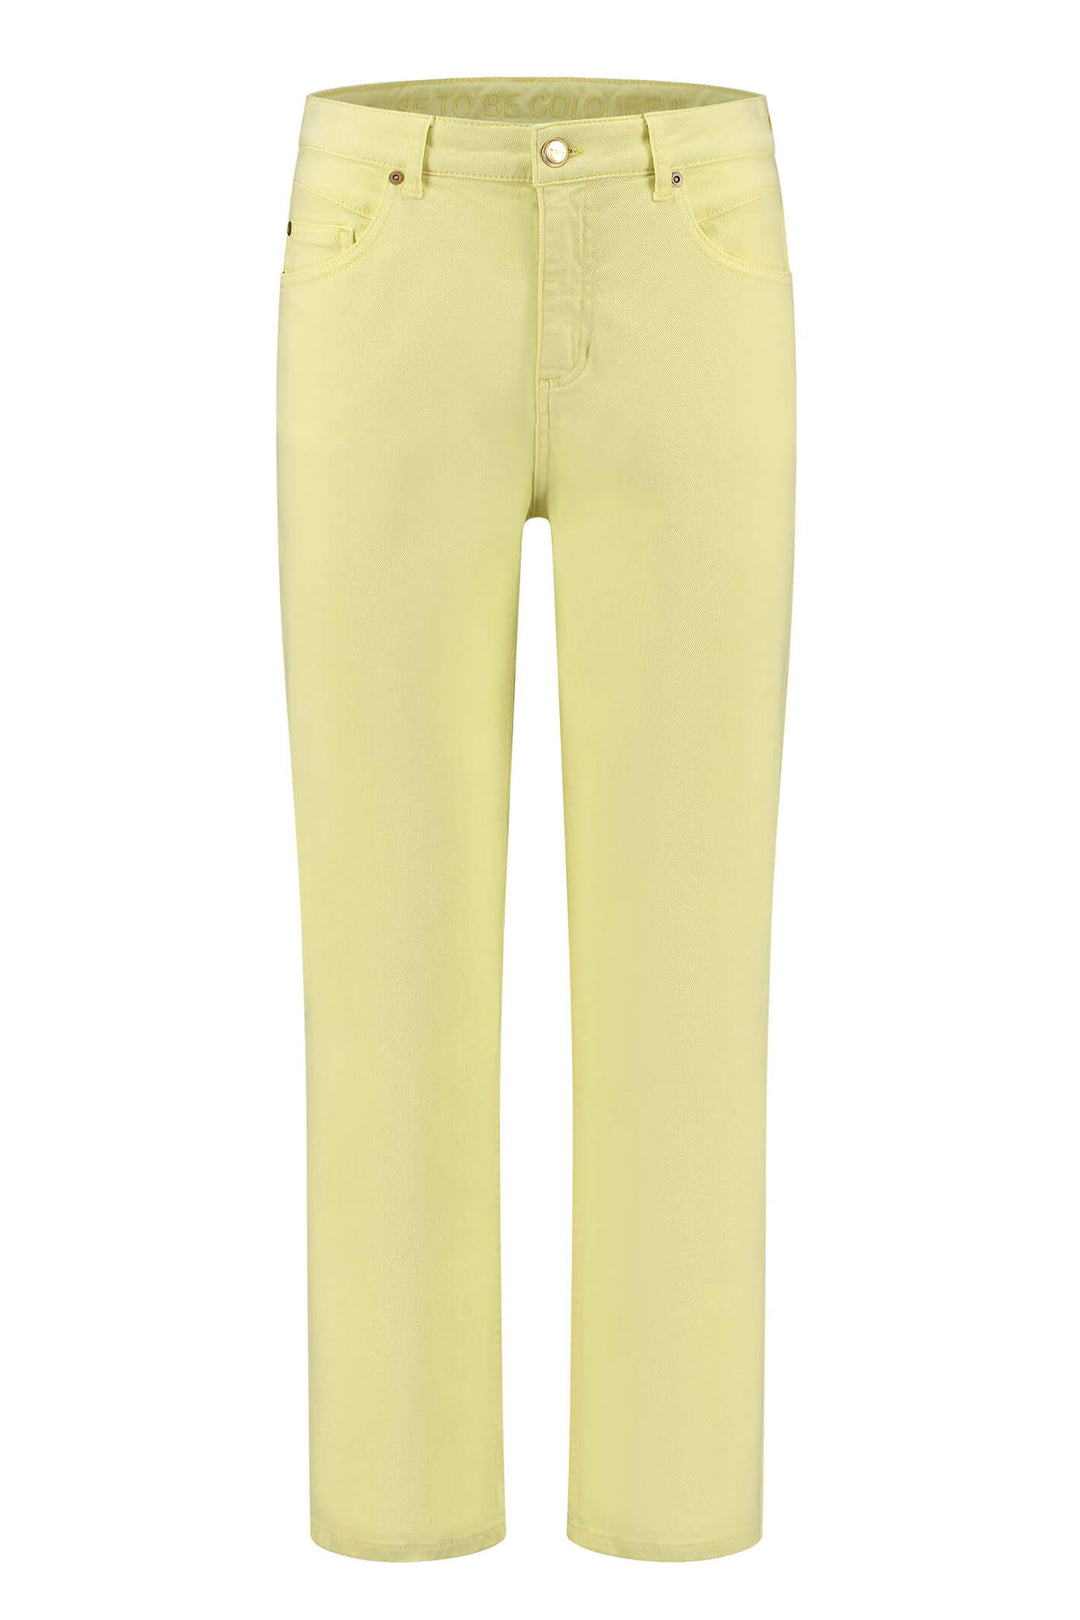 POM Amsterdam SP6859 Elli Denim Luminous Lime Jeans - Shirley Allum Boutique